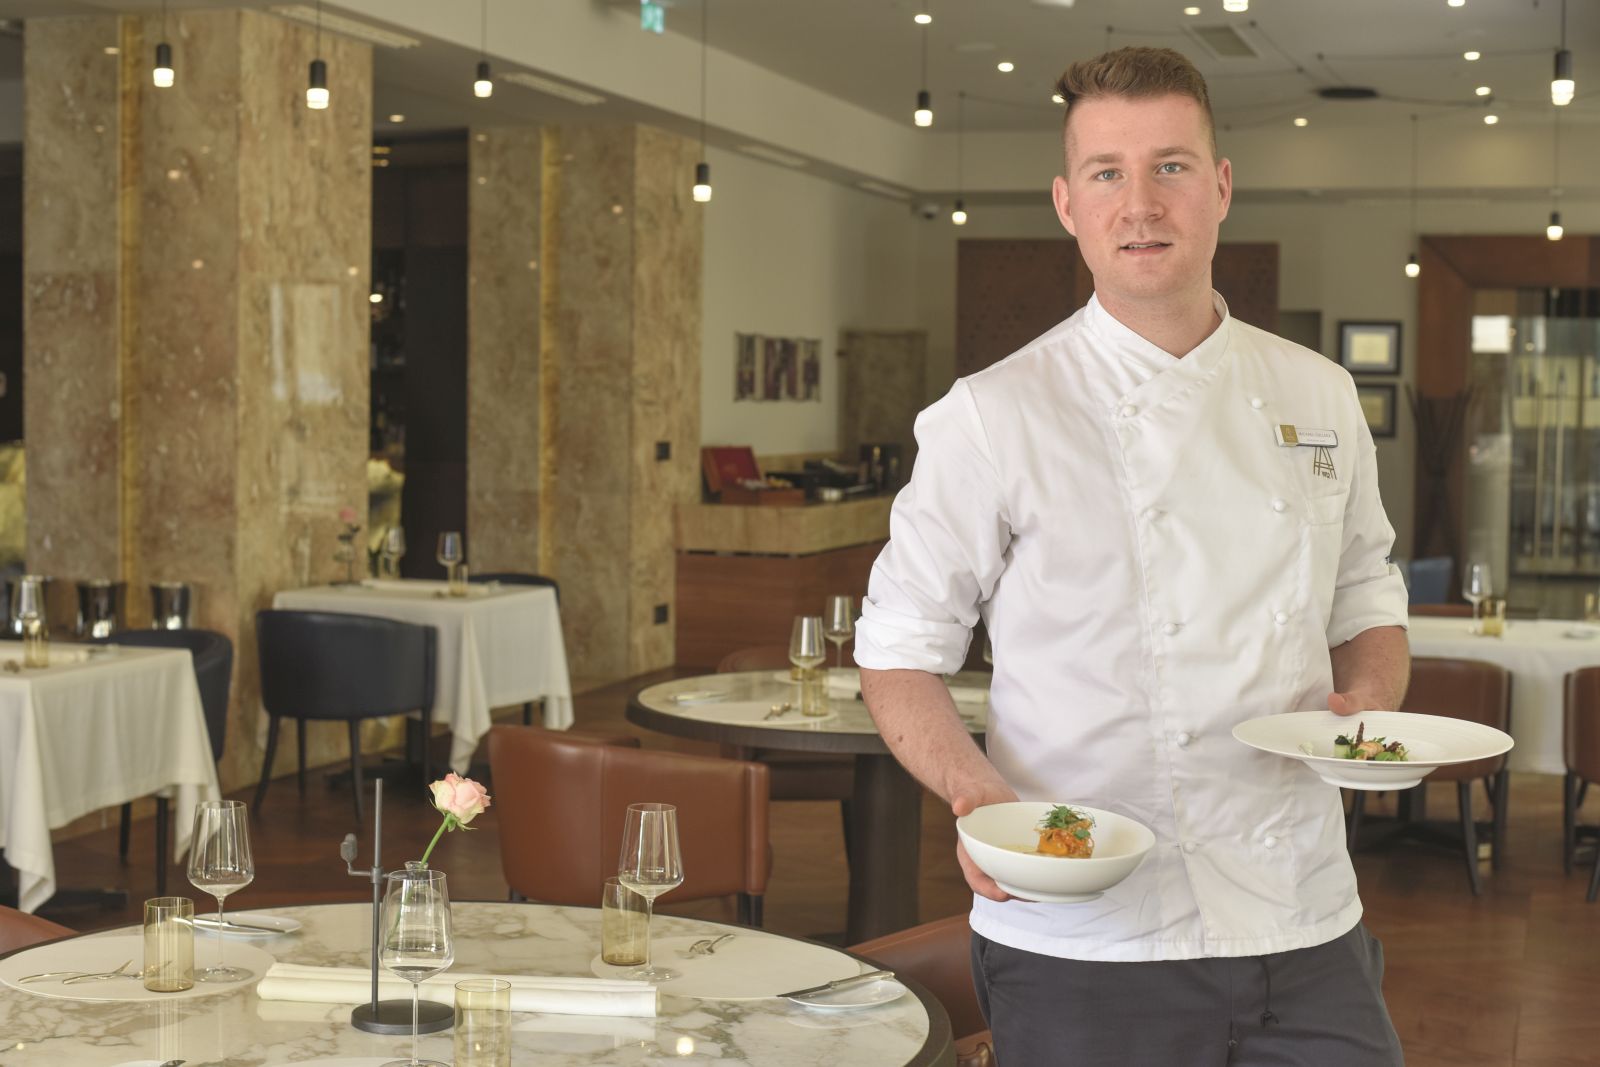 10.09.2021., Mali Losinj - Restoran Alfred Keller u hotelu Alhambra. Michael Gollenz, chef.
Photo Sasa ZinajaNFoto